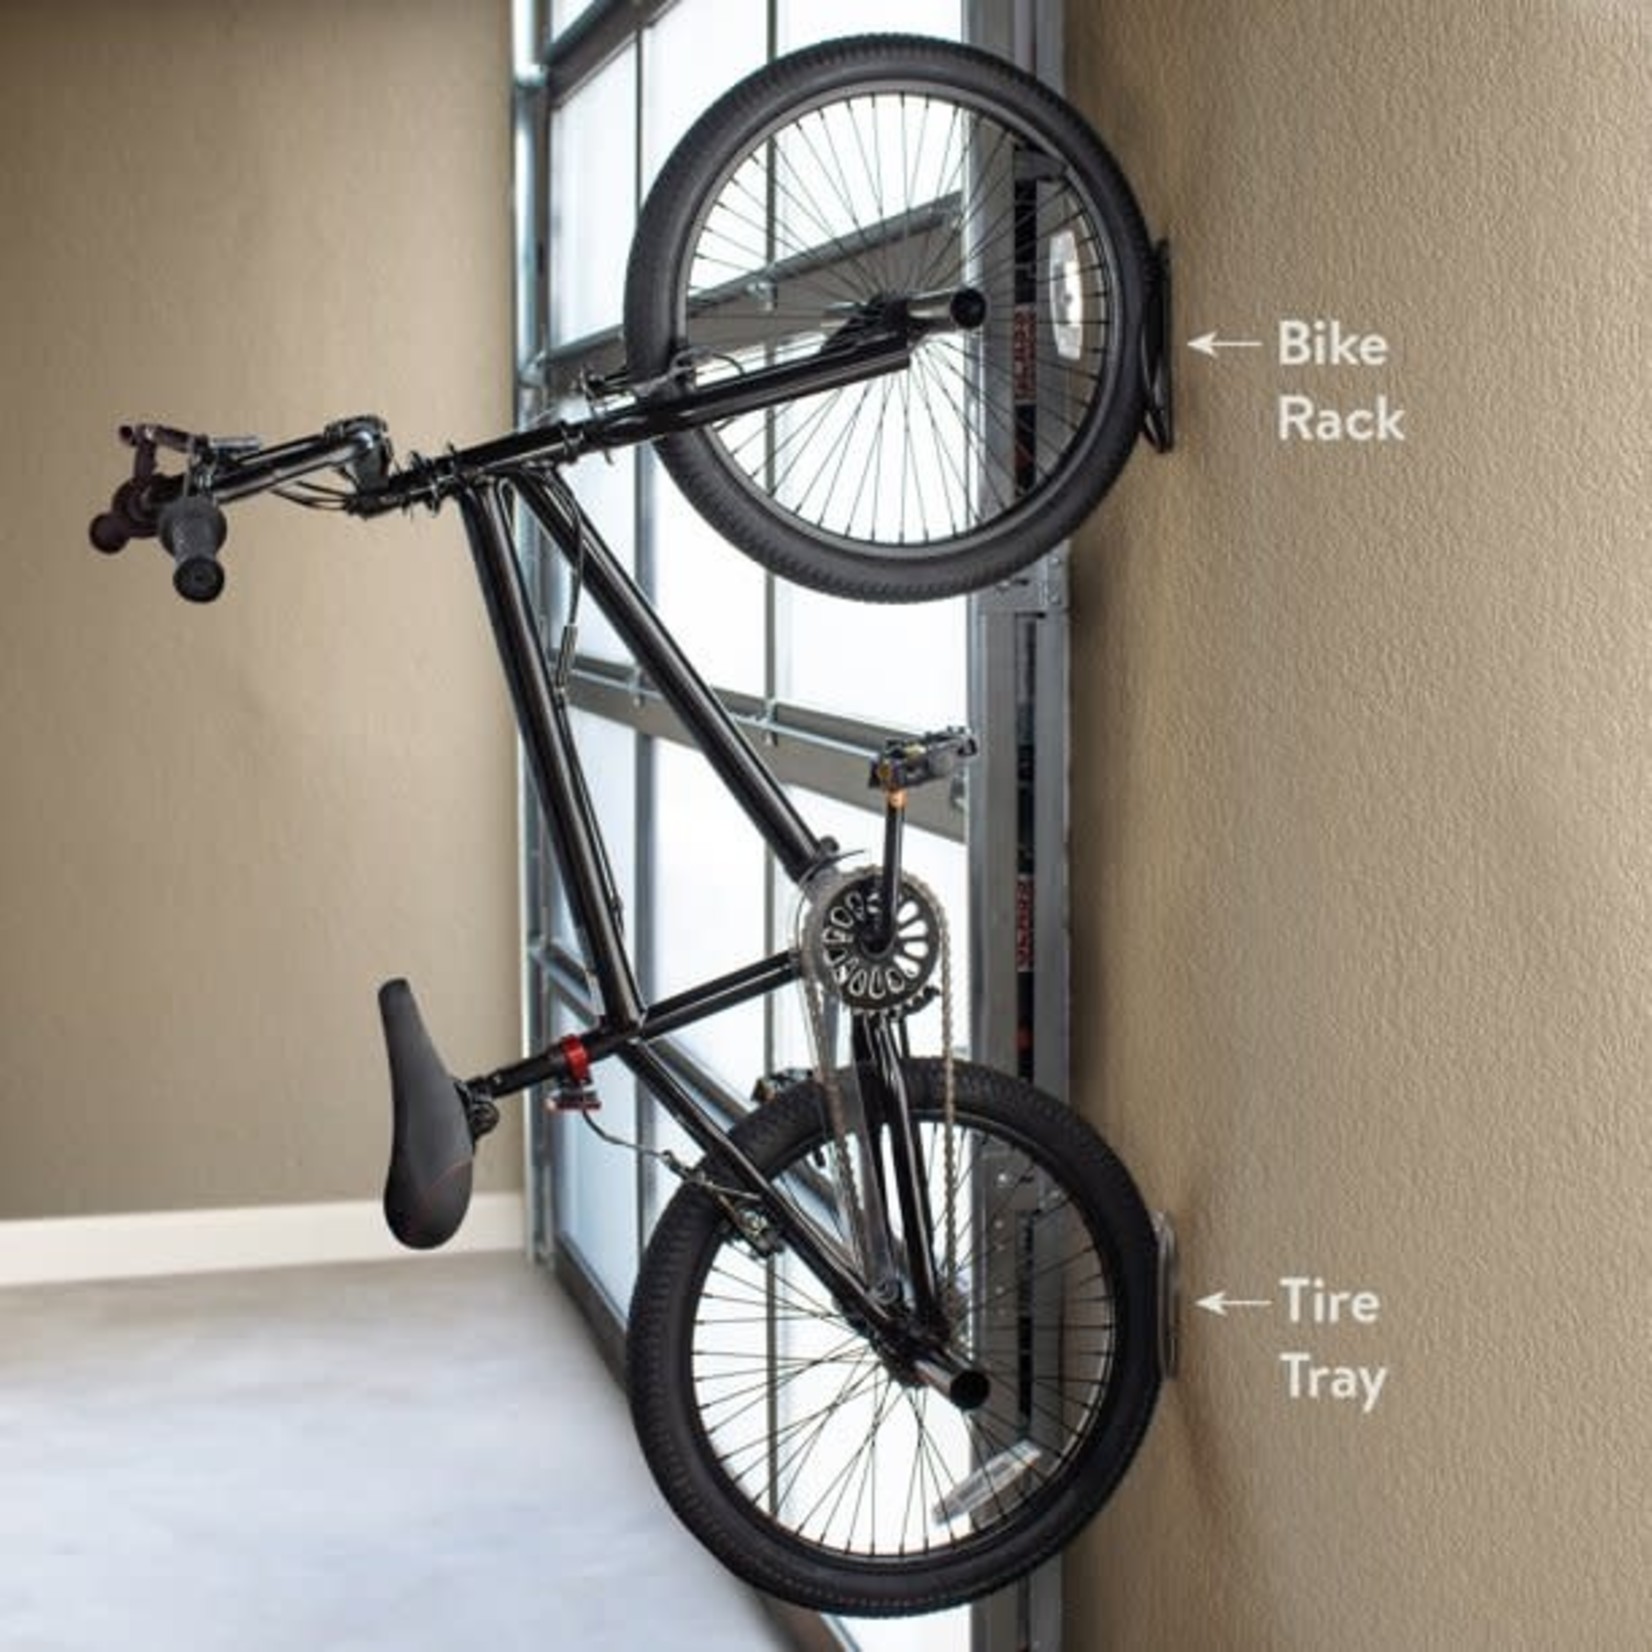 Bike Shop Bike Shop 2pc Wall Mounted Bike Rack with Tire Tray, Black